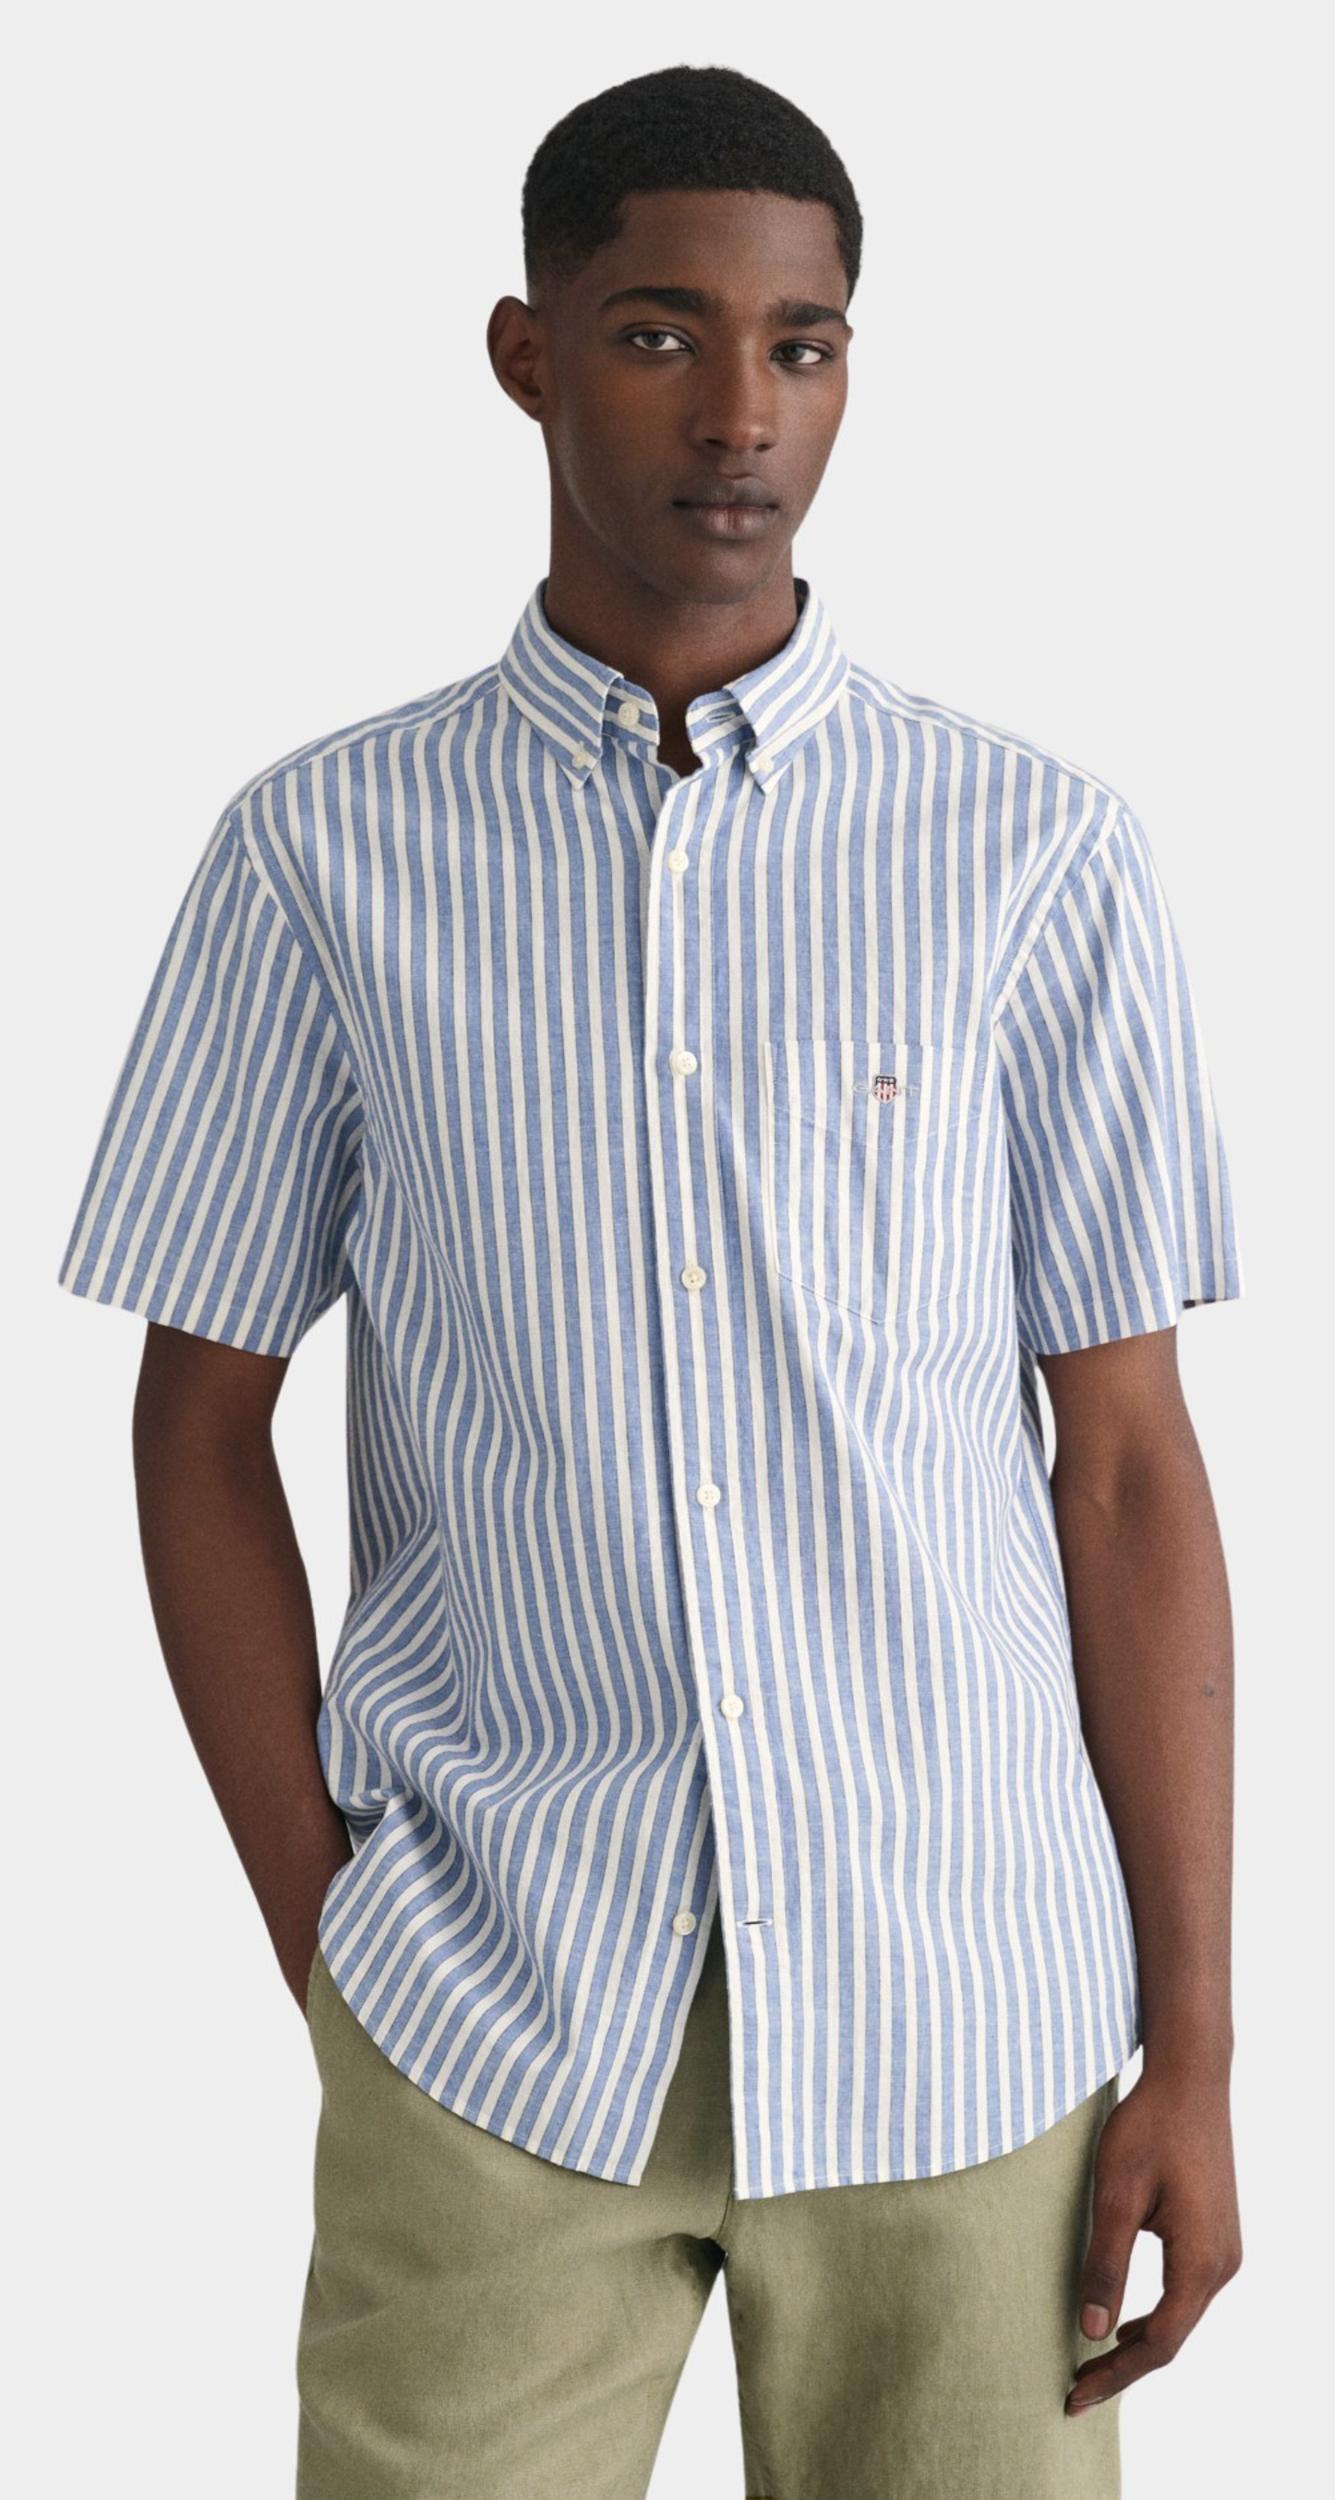 Gant Casual hemd korte mouw Blauw Cotton Linen Stripe SS Shirt 3240061/407